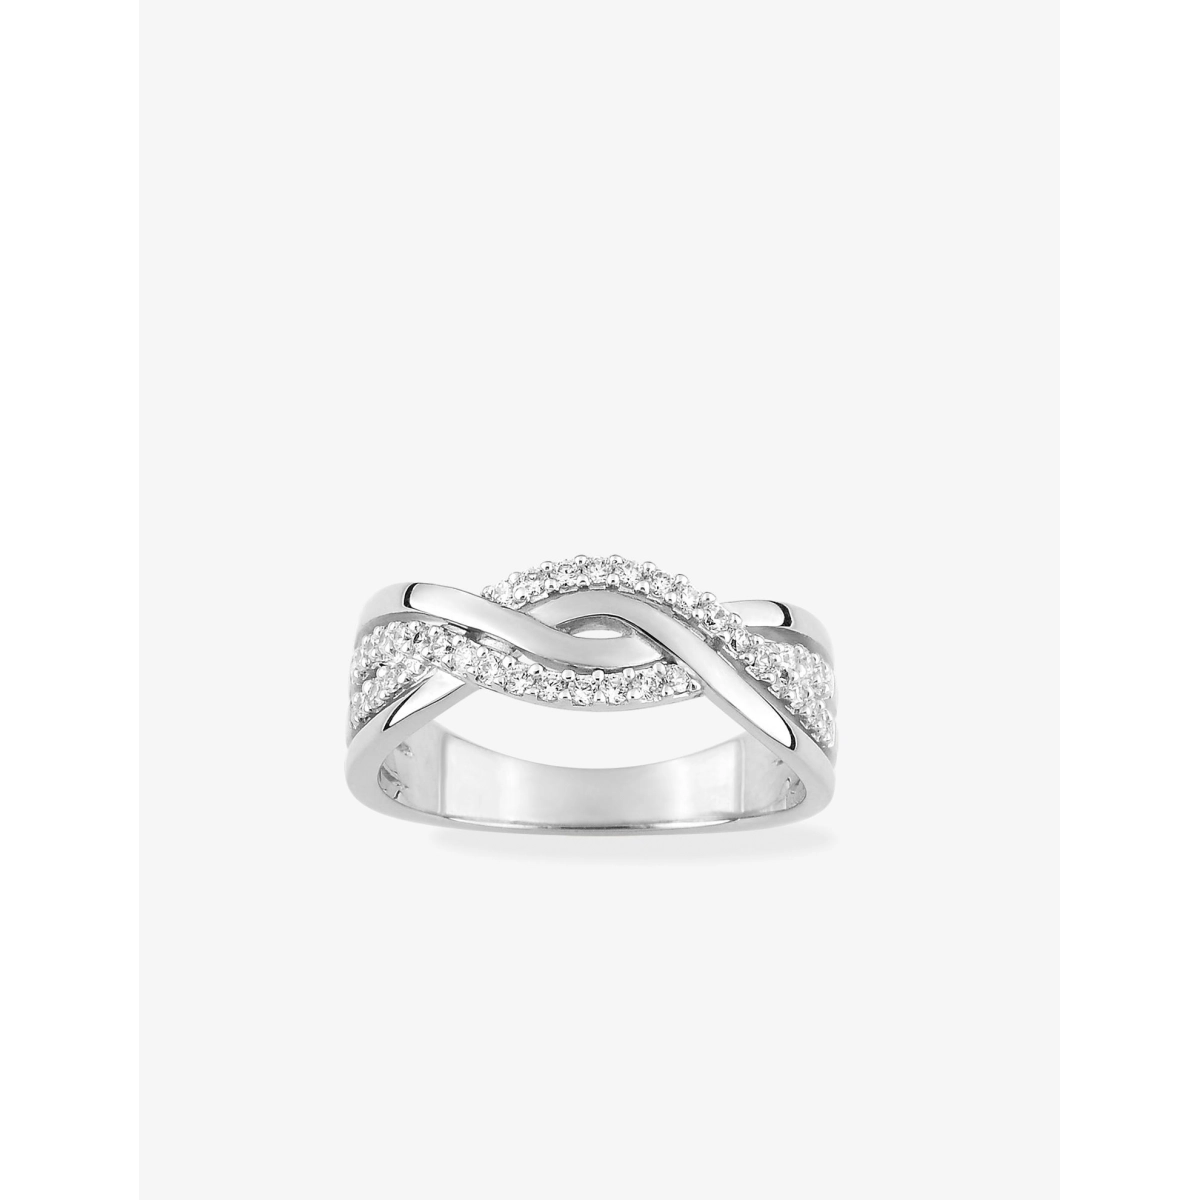 Ring w. cz rh925 Silver Lua Blanca  450163.9 - Size 55